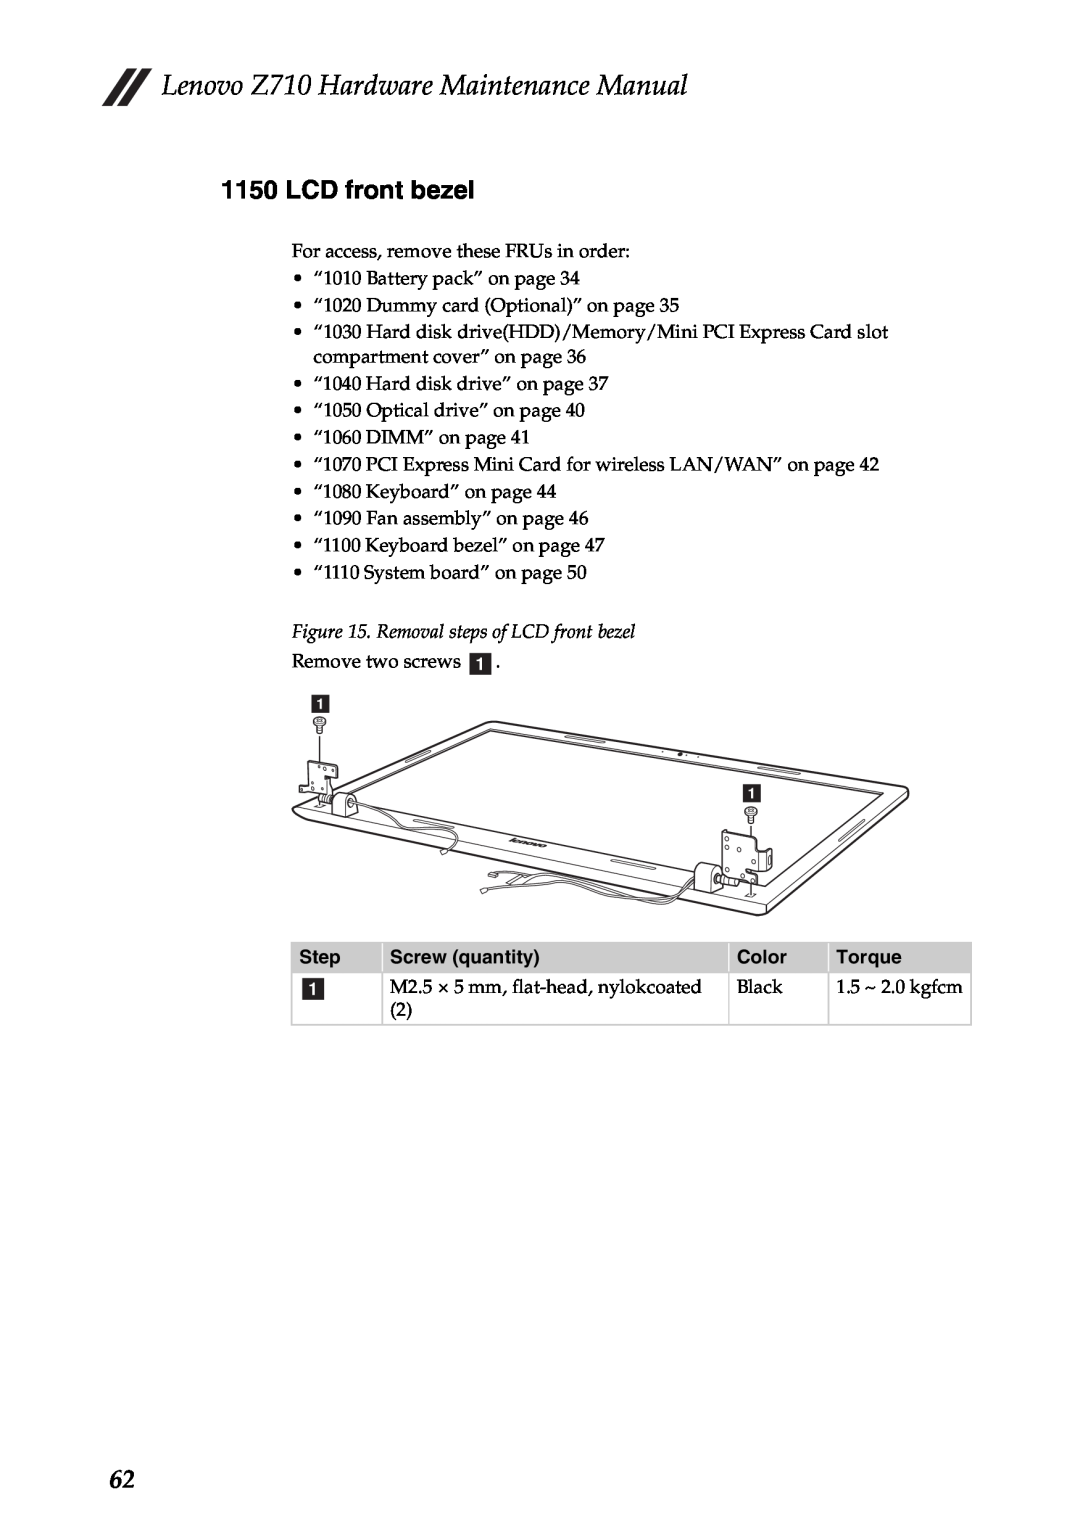 Lenovo manual Removal steps of LCD front bezel, Lenovo Z710 Hardware Maintenance Manual 